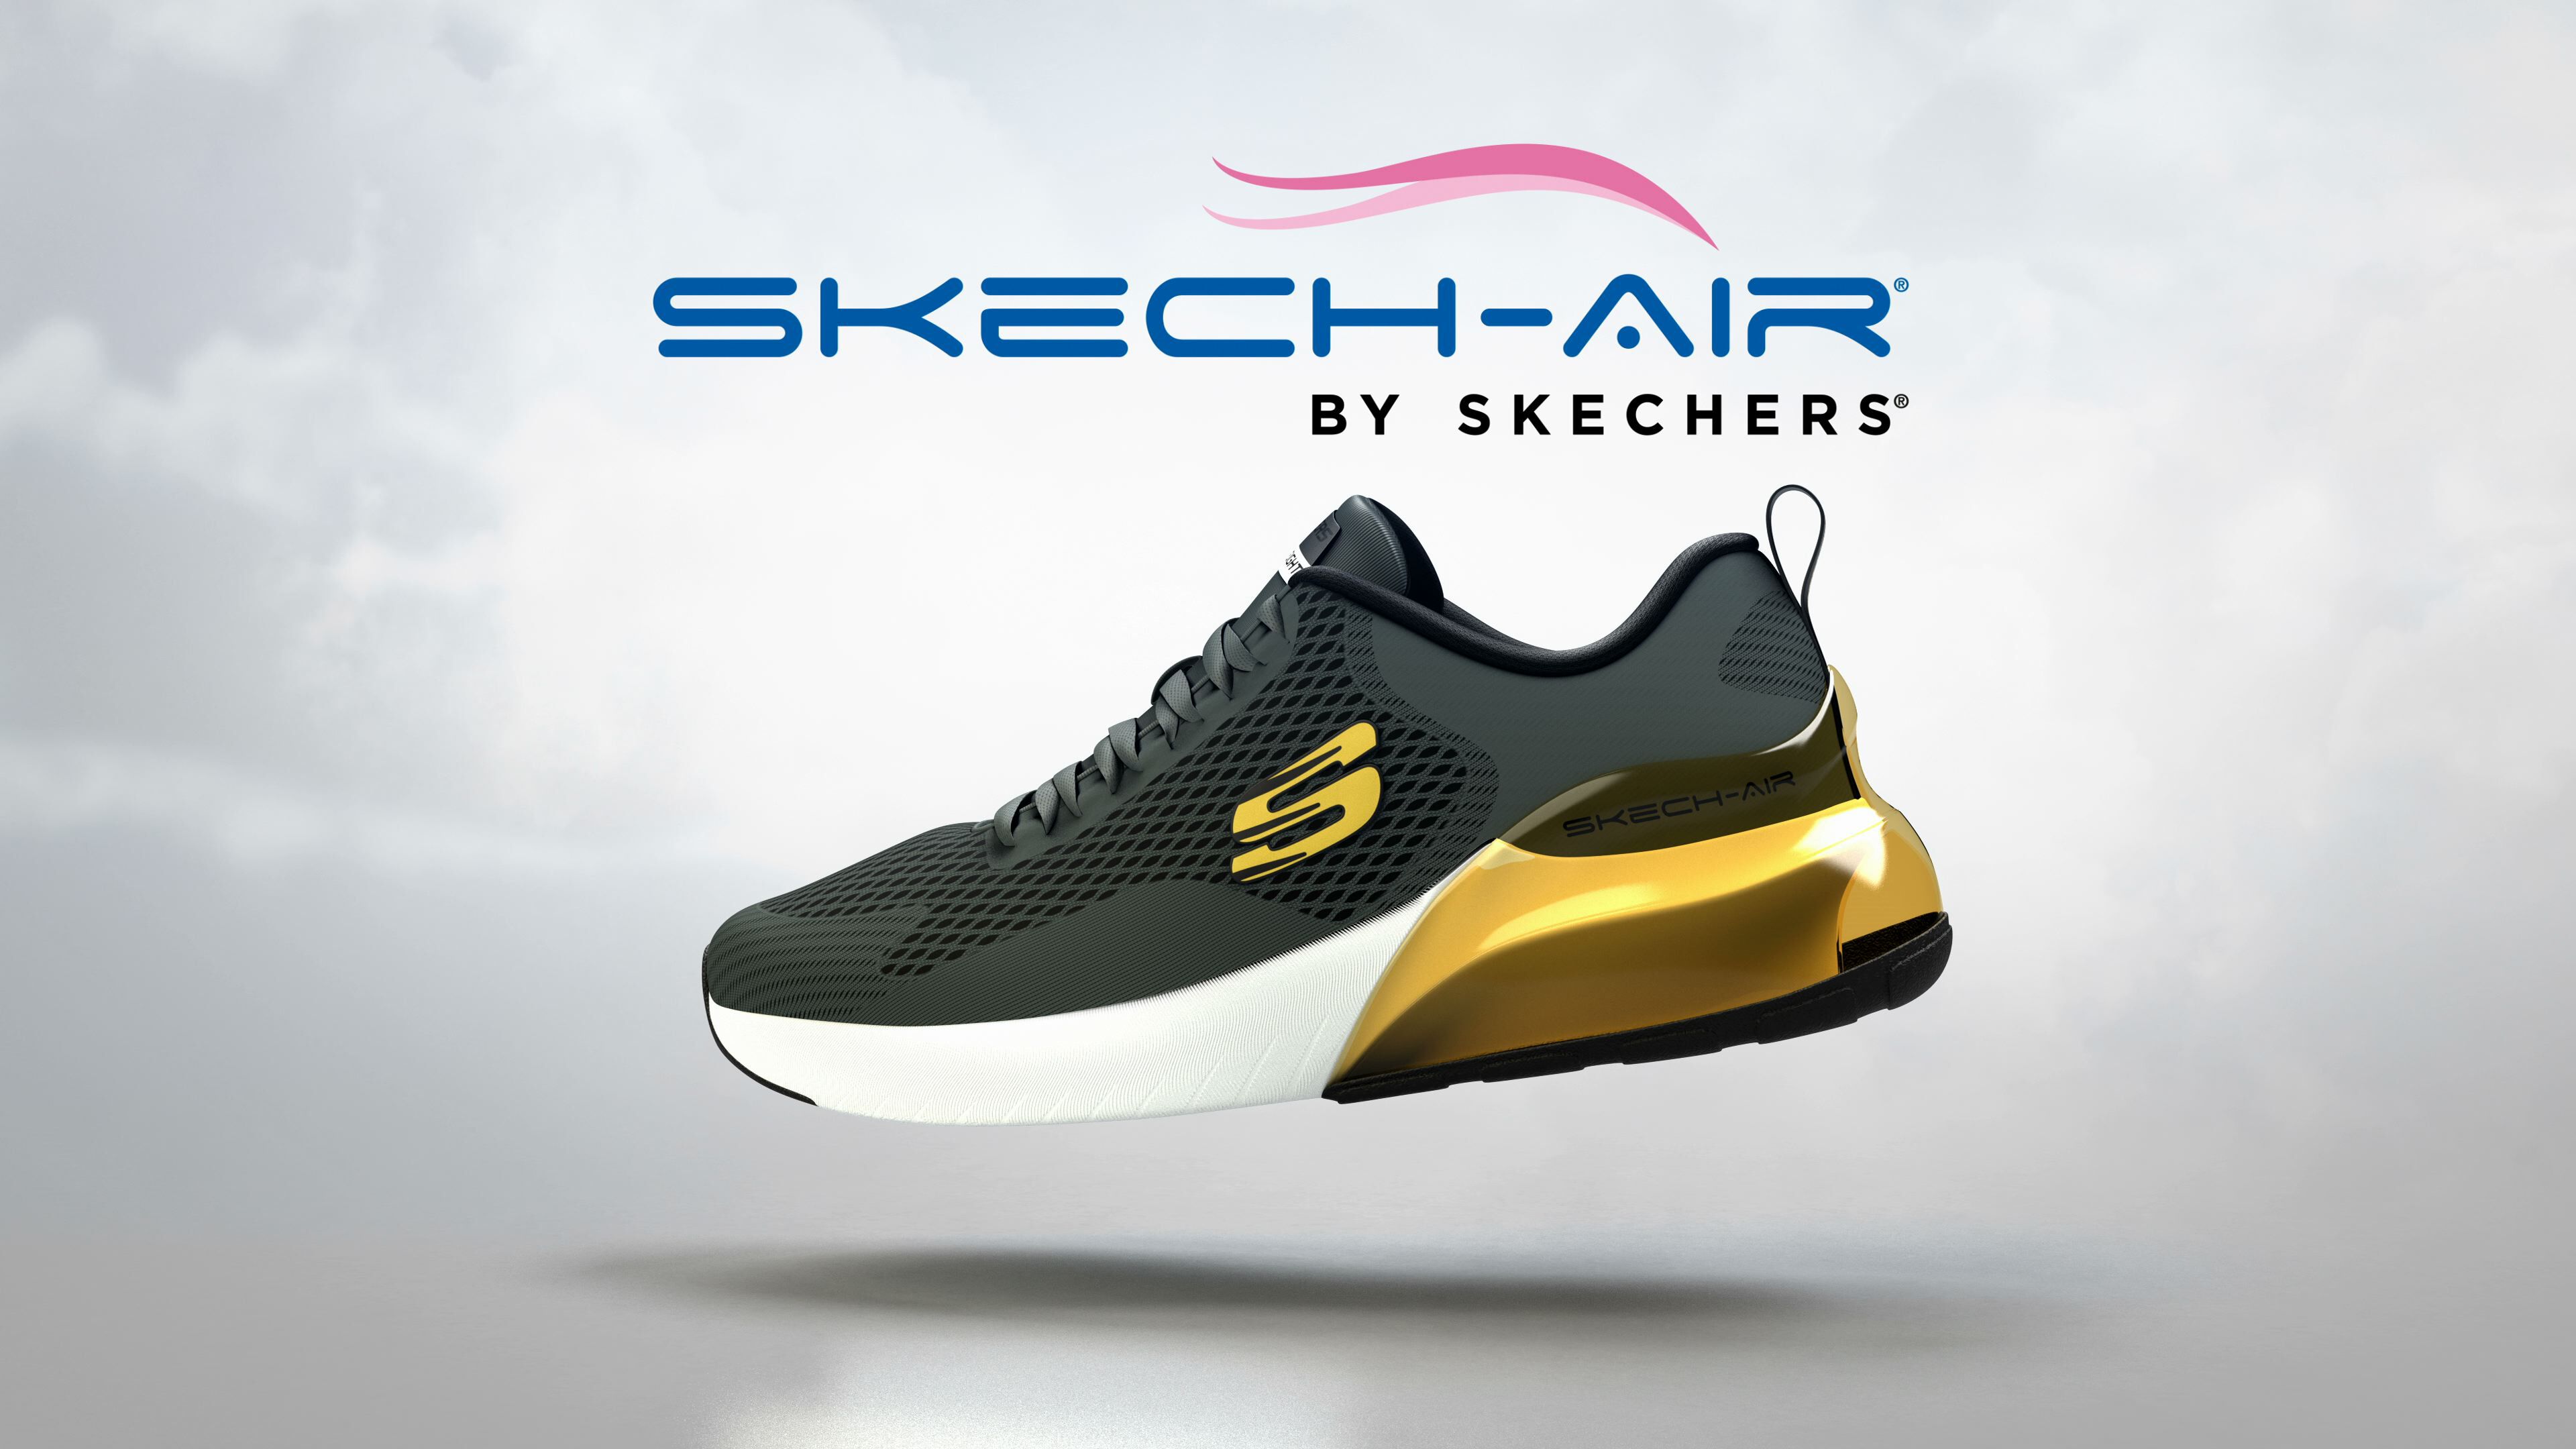 skechers shoes advertisement